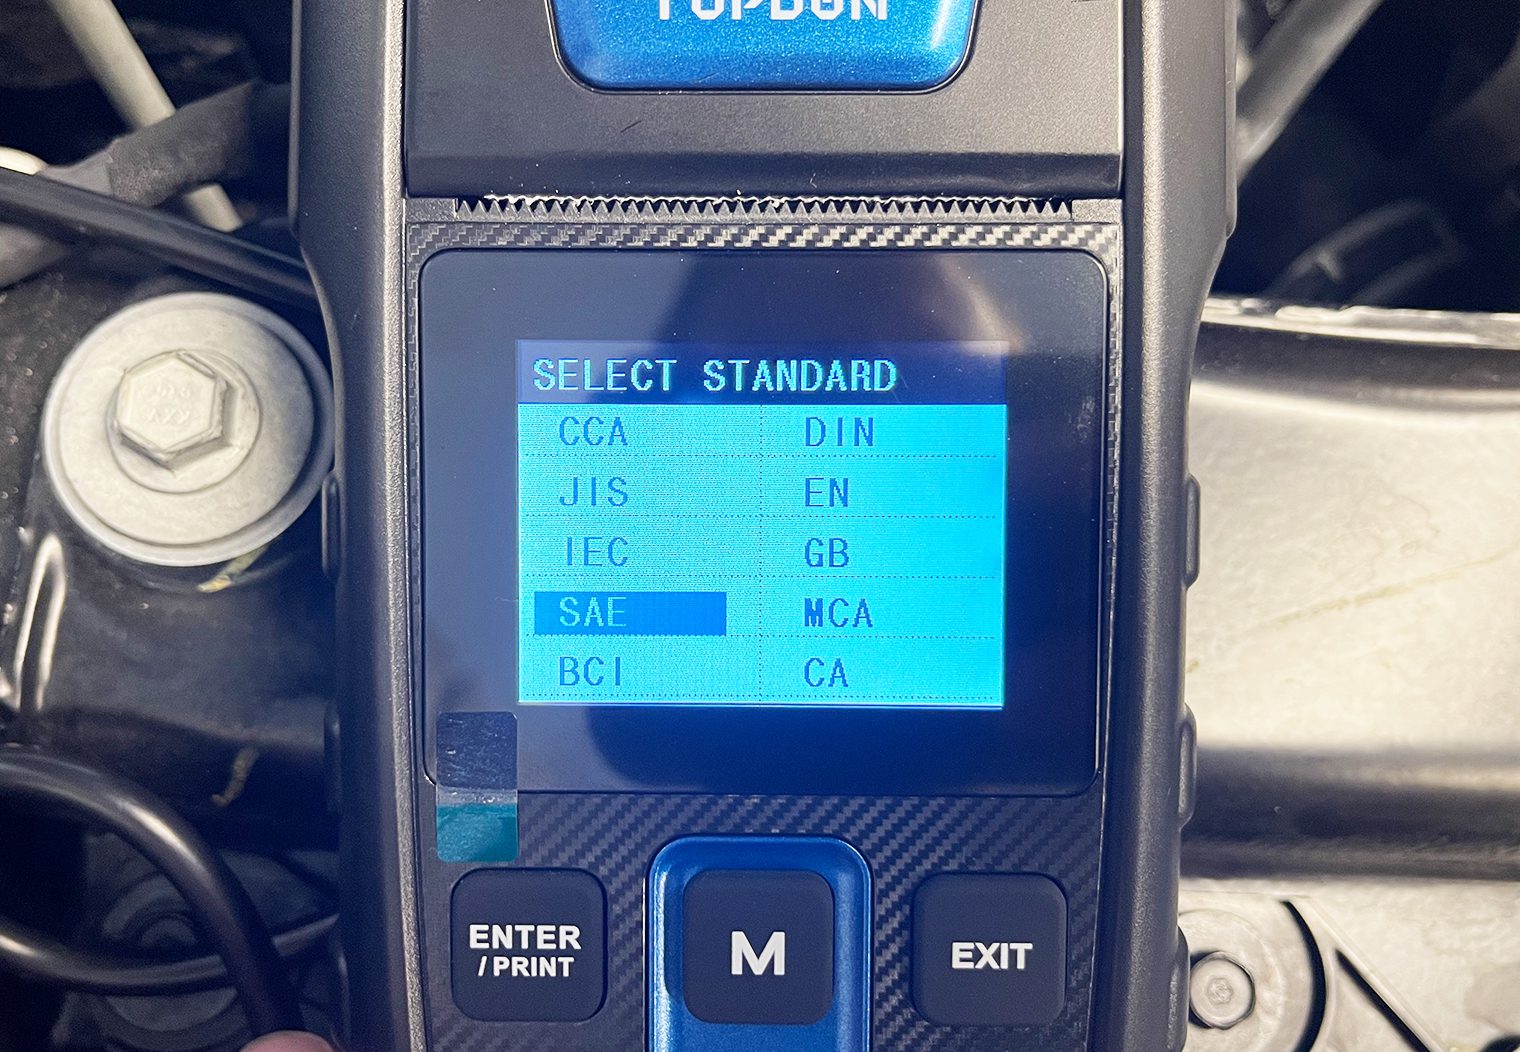 TOPDON BT300P battery standard selection